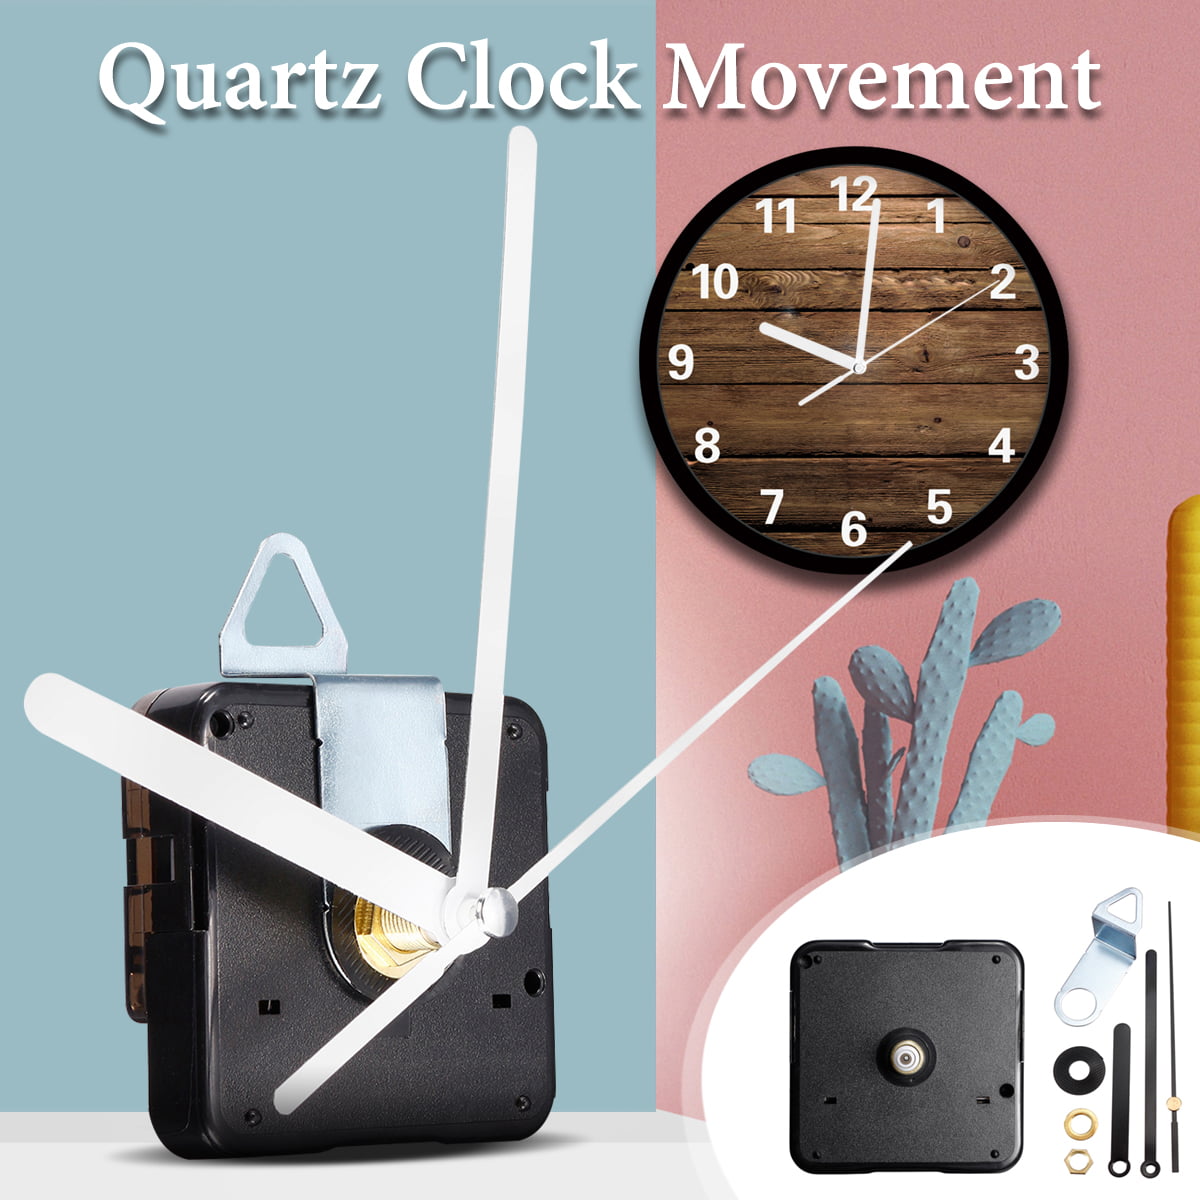 Details about  / Mute Silent Quartz Wall Clock Movement DIY Hands Mechanism Repair Parts Tool Kit